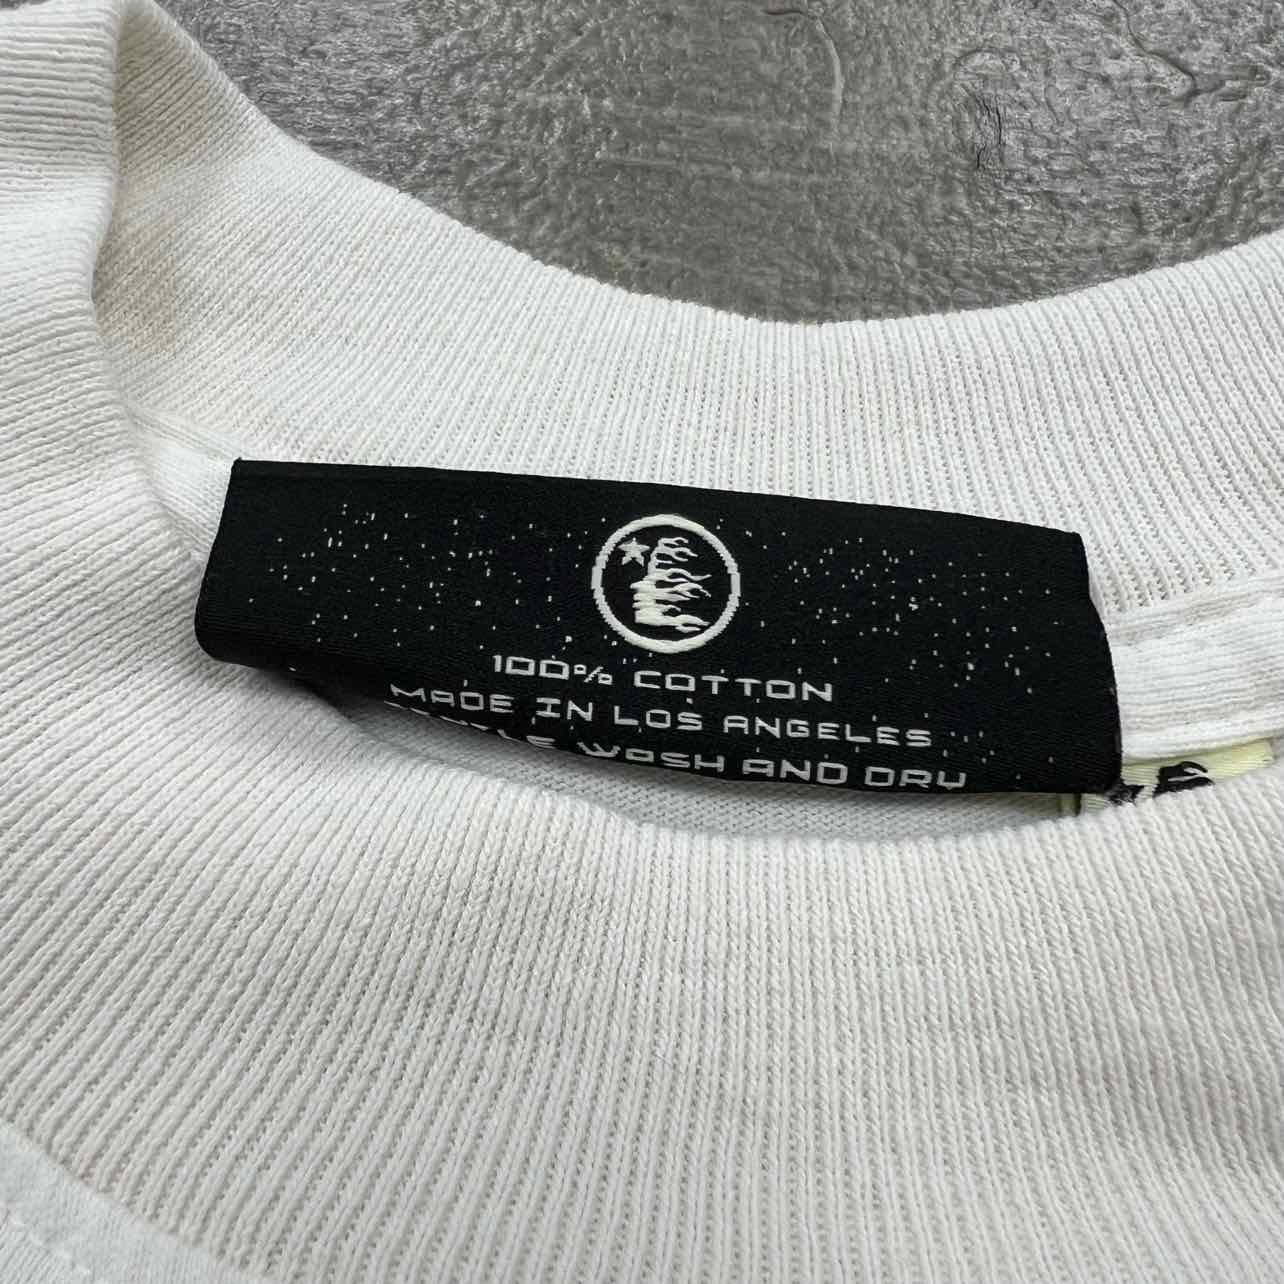 Hellstar T-Shirt &quot;FRANKENKID&quot; Cream New Size XL